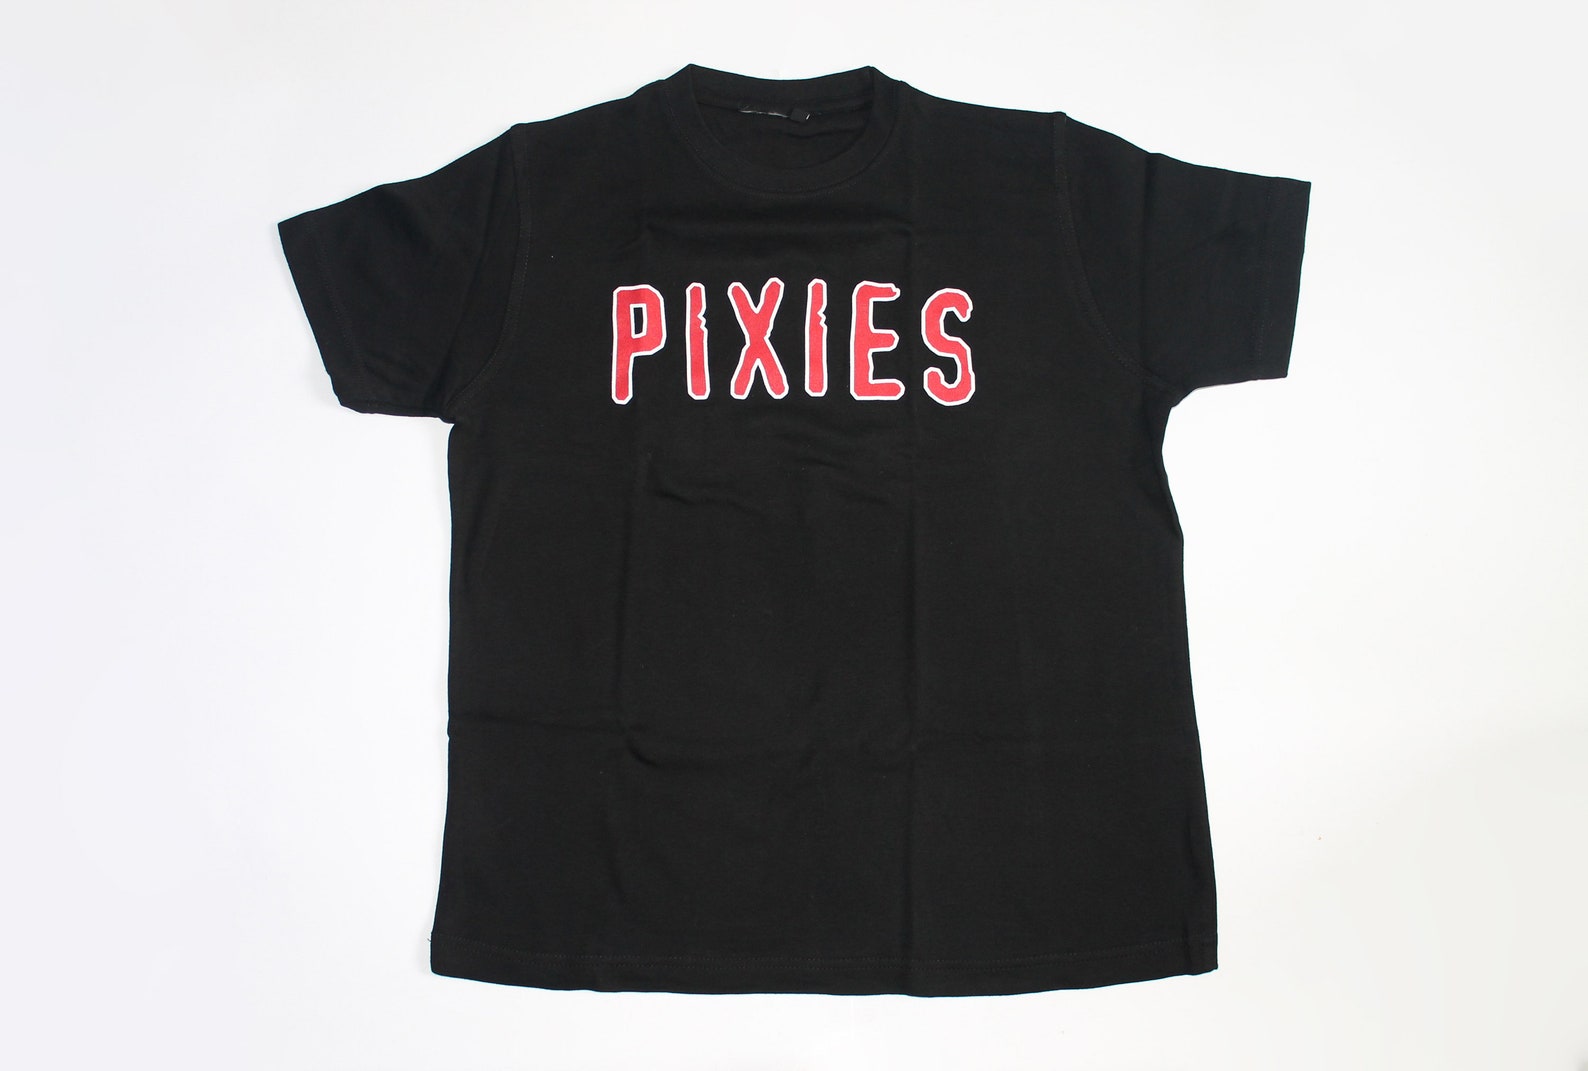 pixies tour merchandise